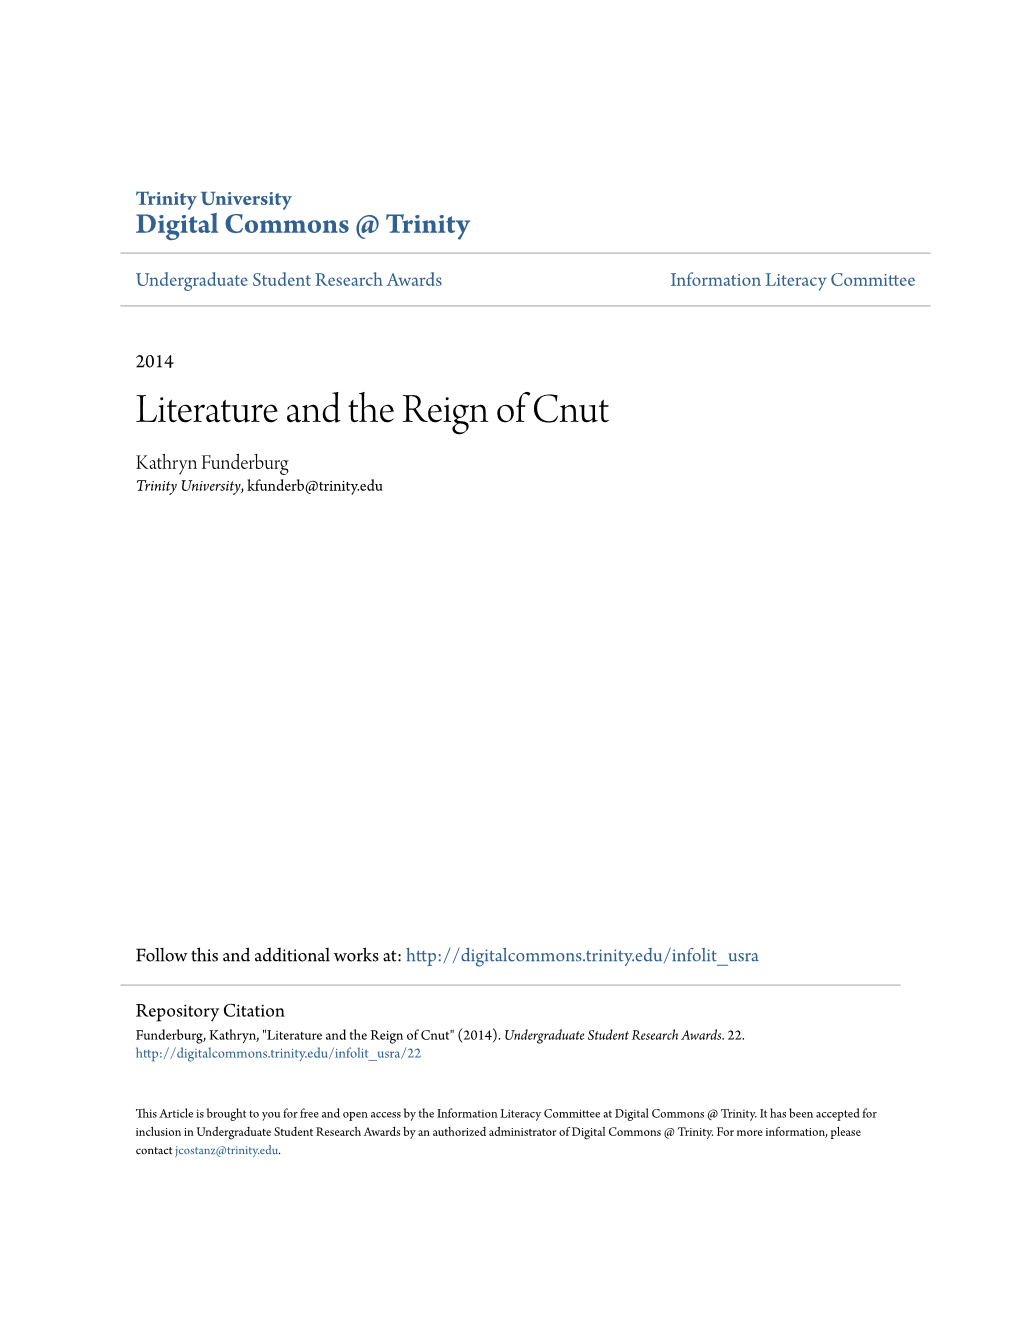 Literature and the Reign of Cnut Kathryn Funderburg Trinity University, Kfunderb@Trinity.Edu